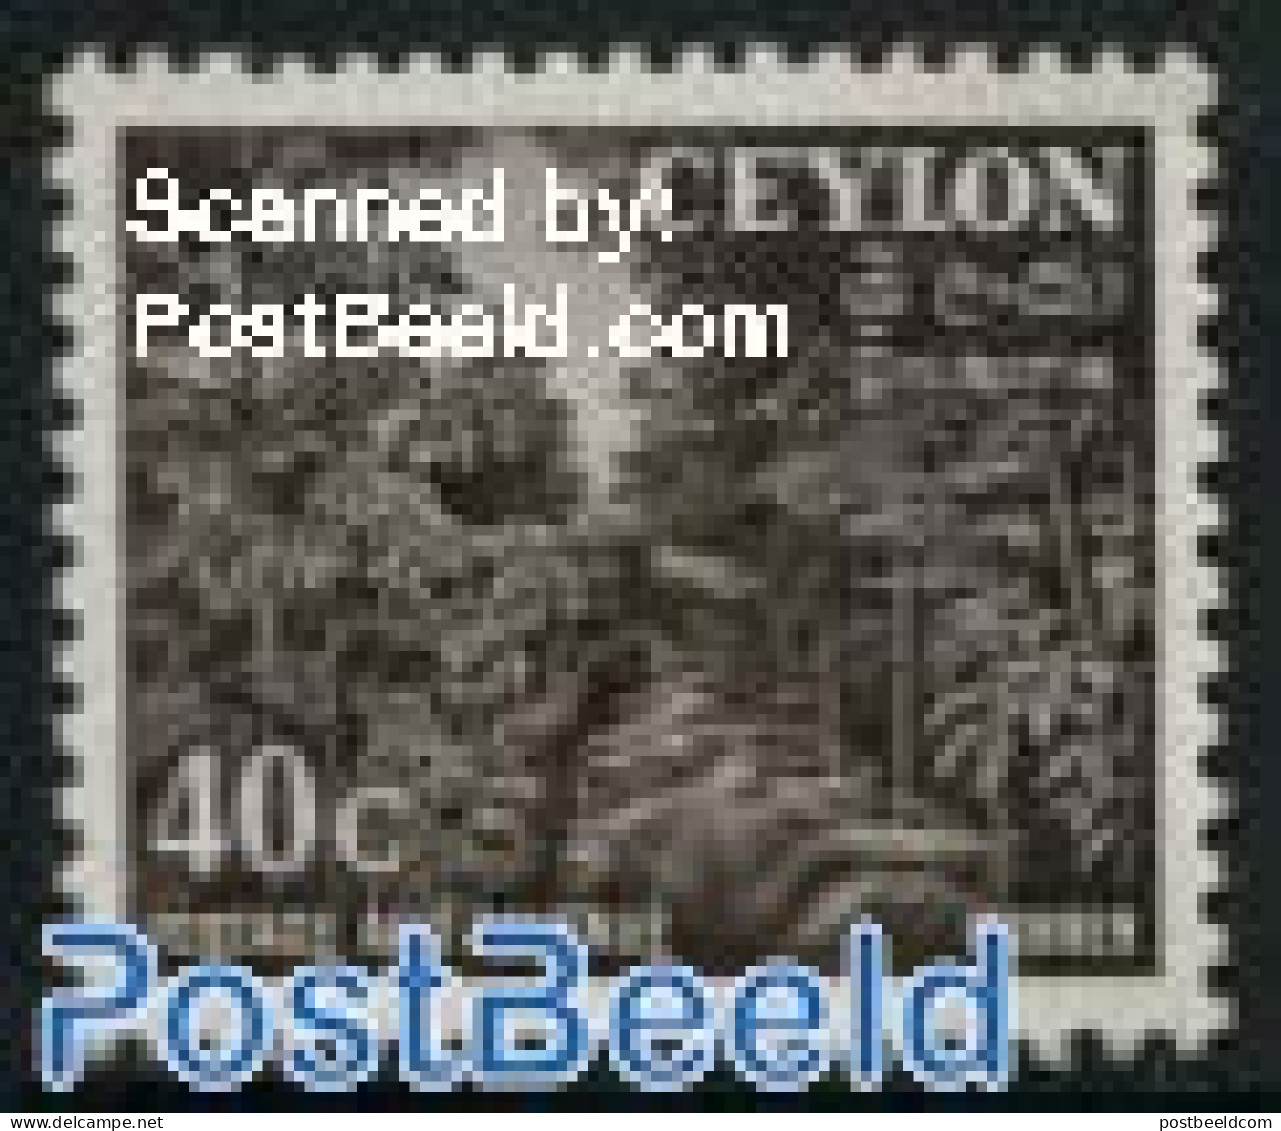 Sri Lanka (Ceylon) 1951 40c, Stamp Out Of Set, Mint NH, Nature - Sri Lanka (Ceylon) (1948-...)